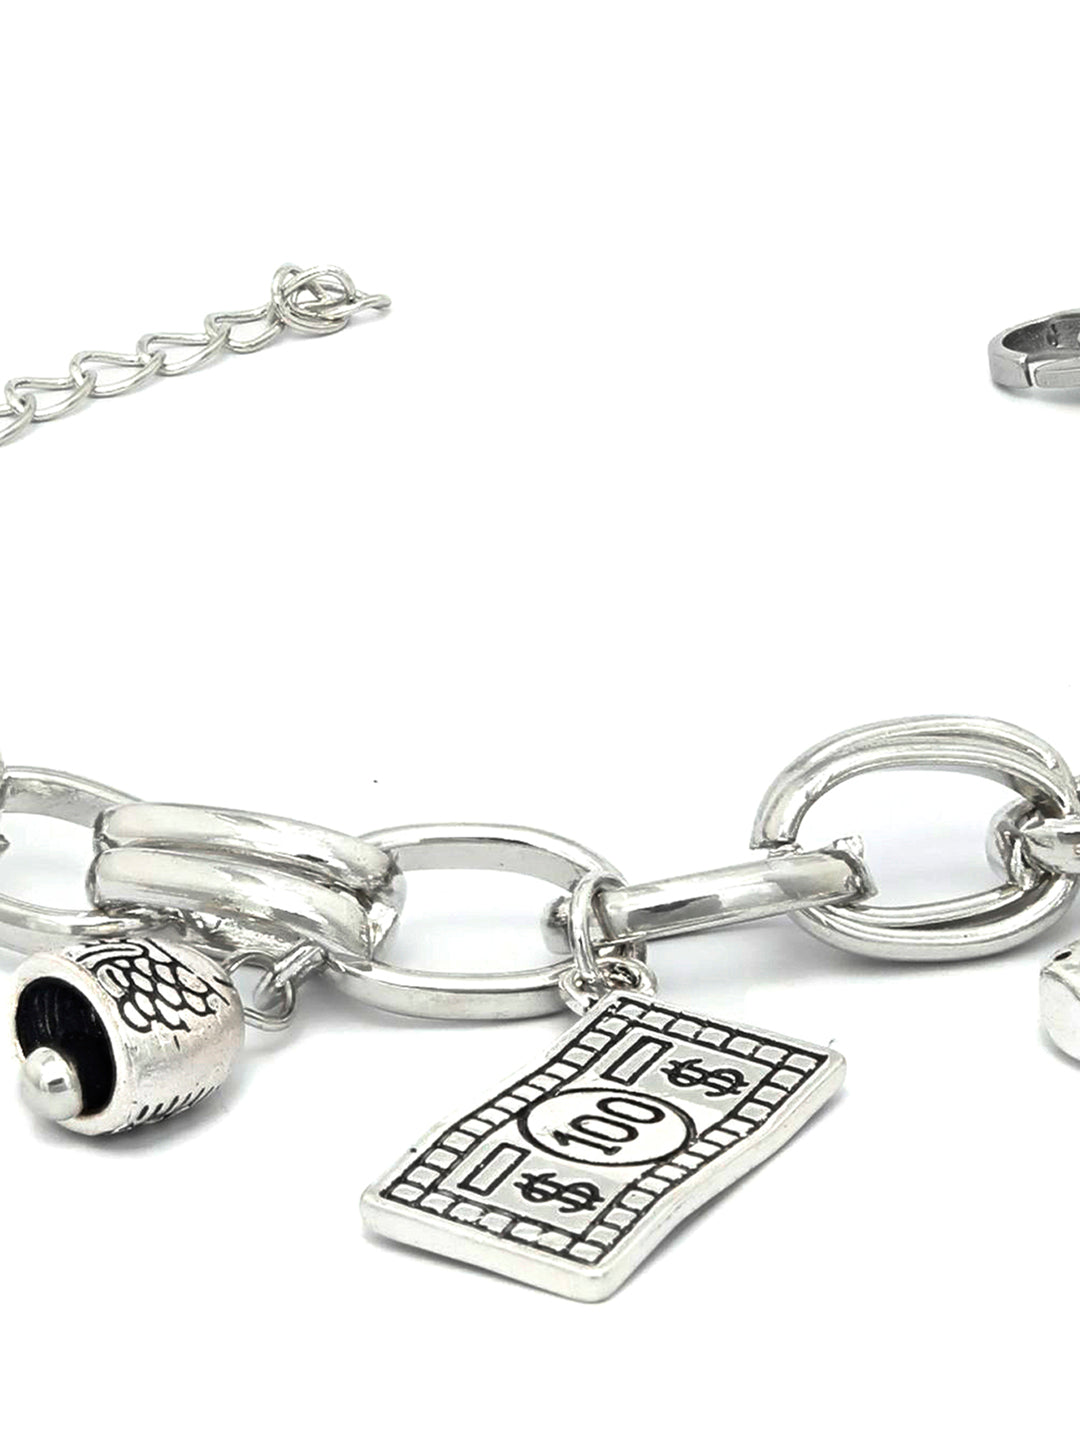 Interlinked Silver Plated Charm Bracelet